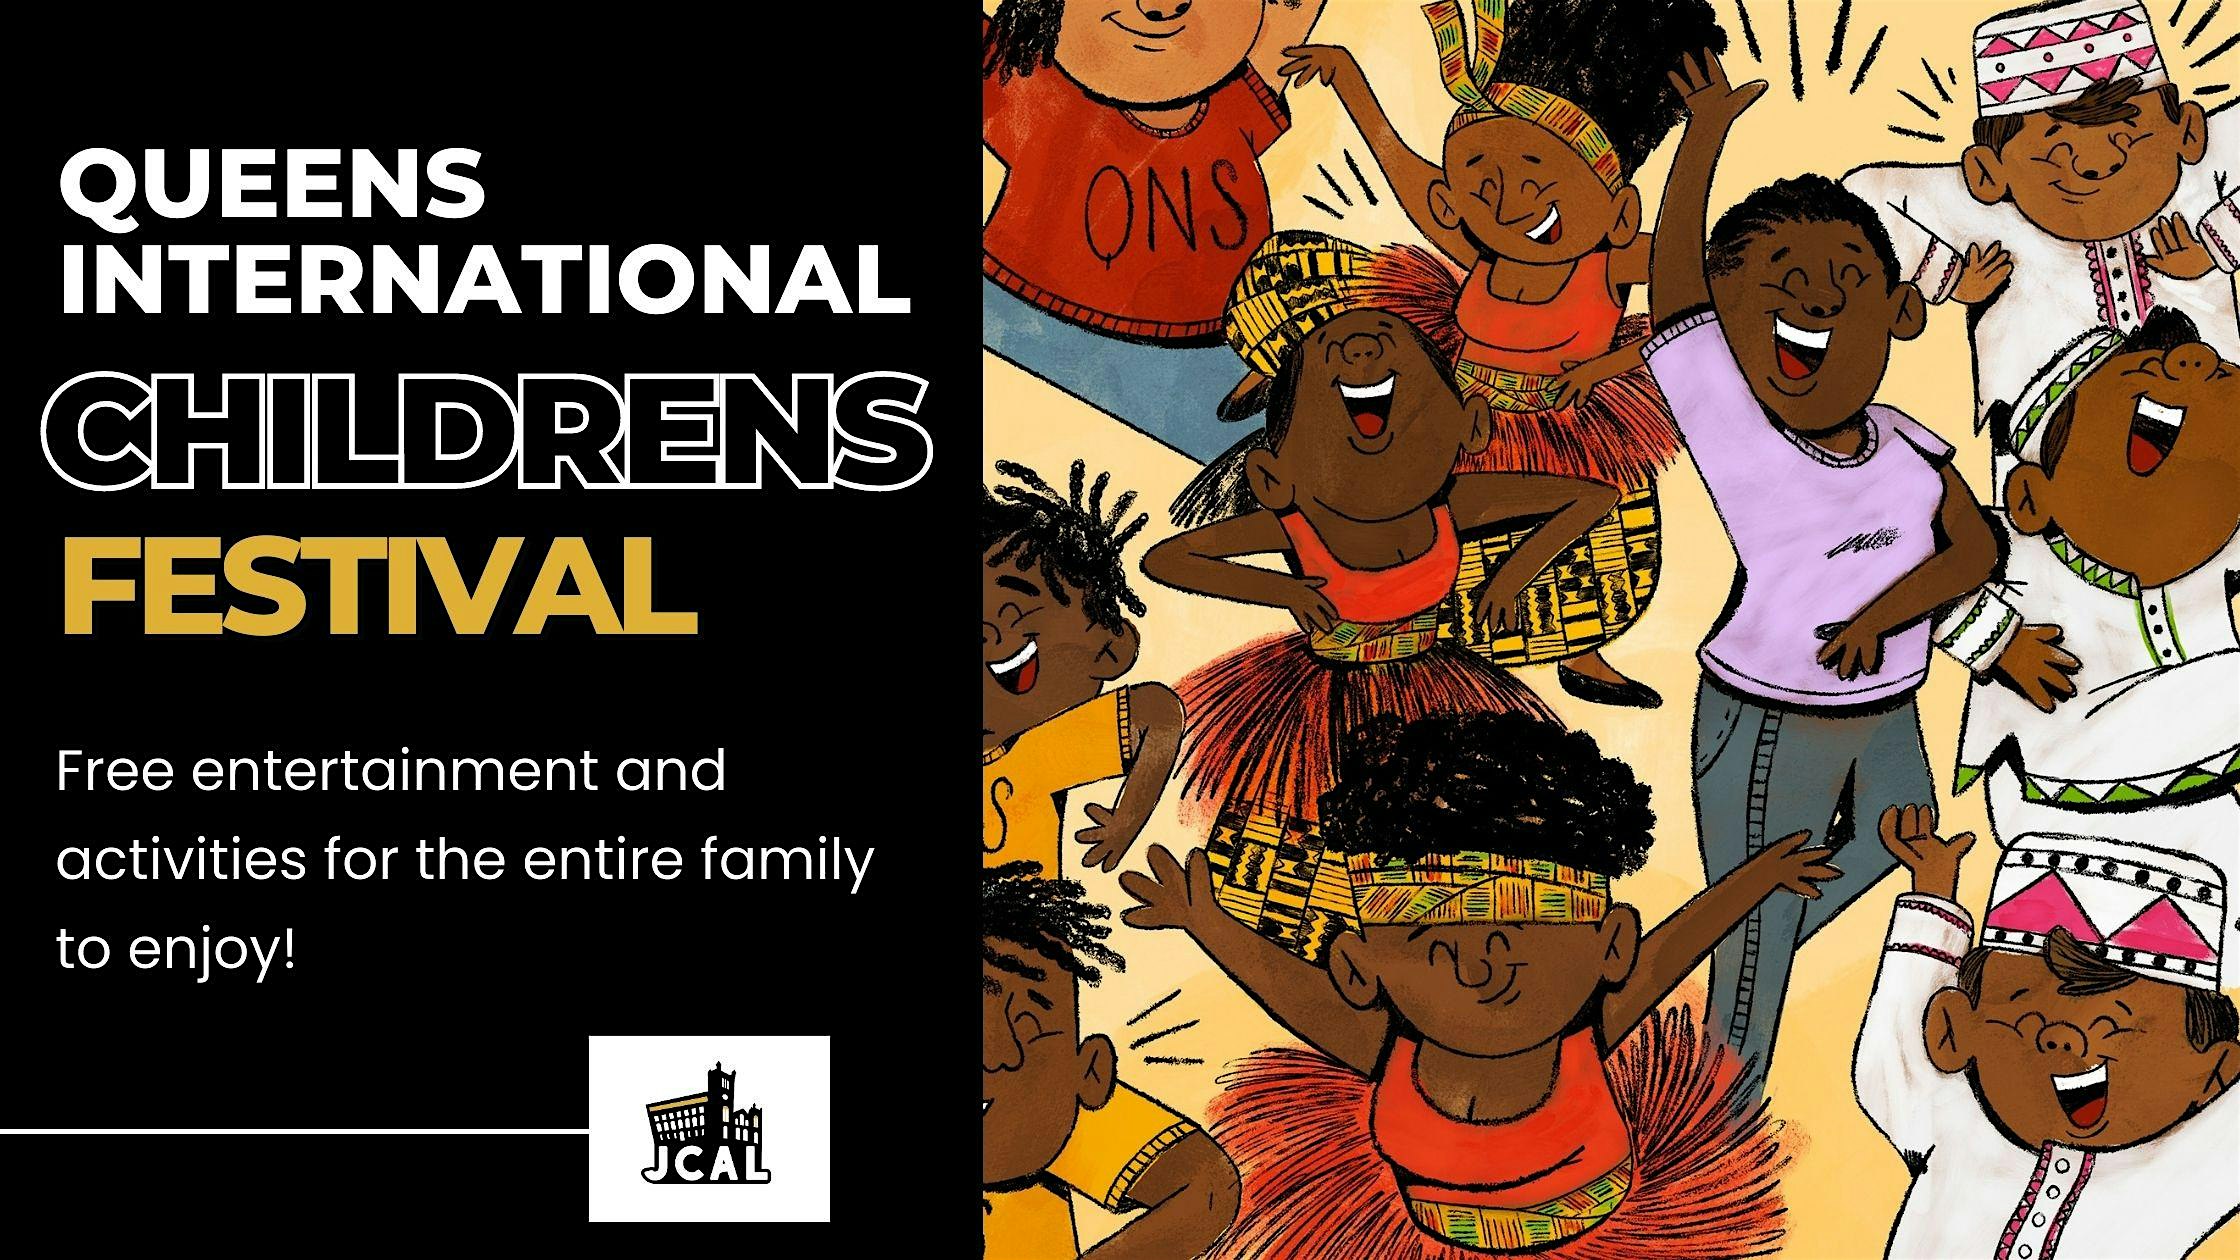 Queens International Children's Festival